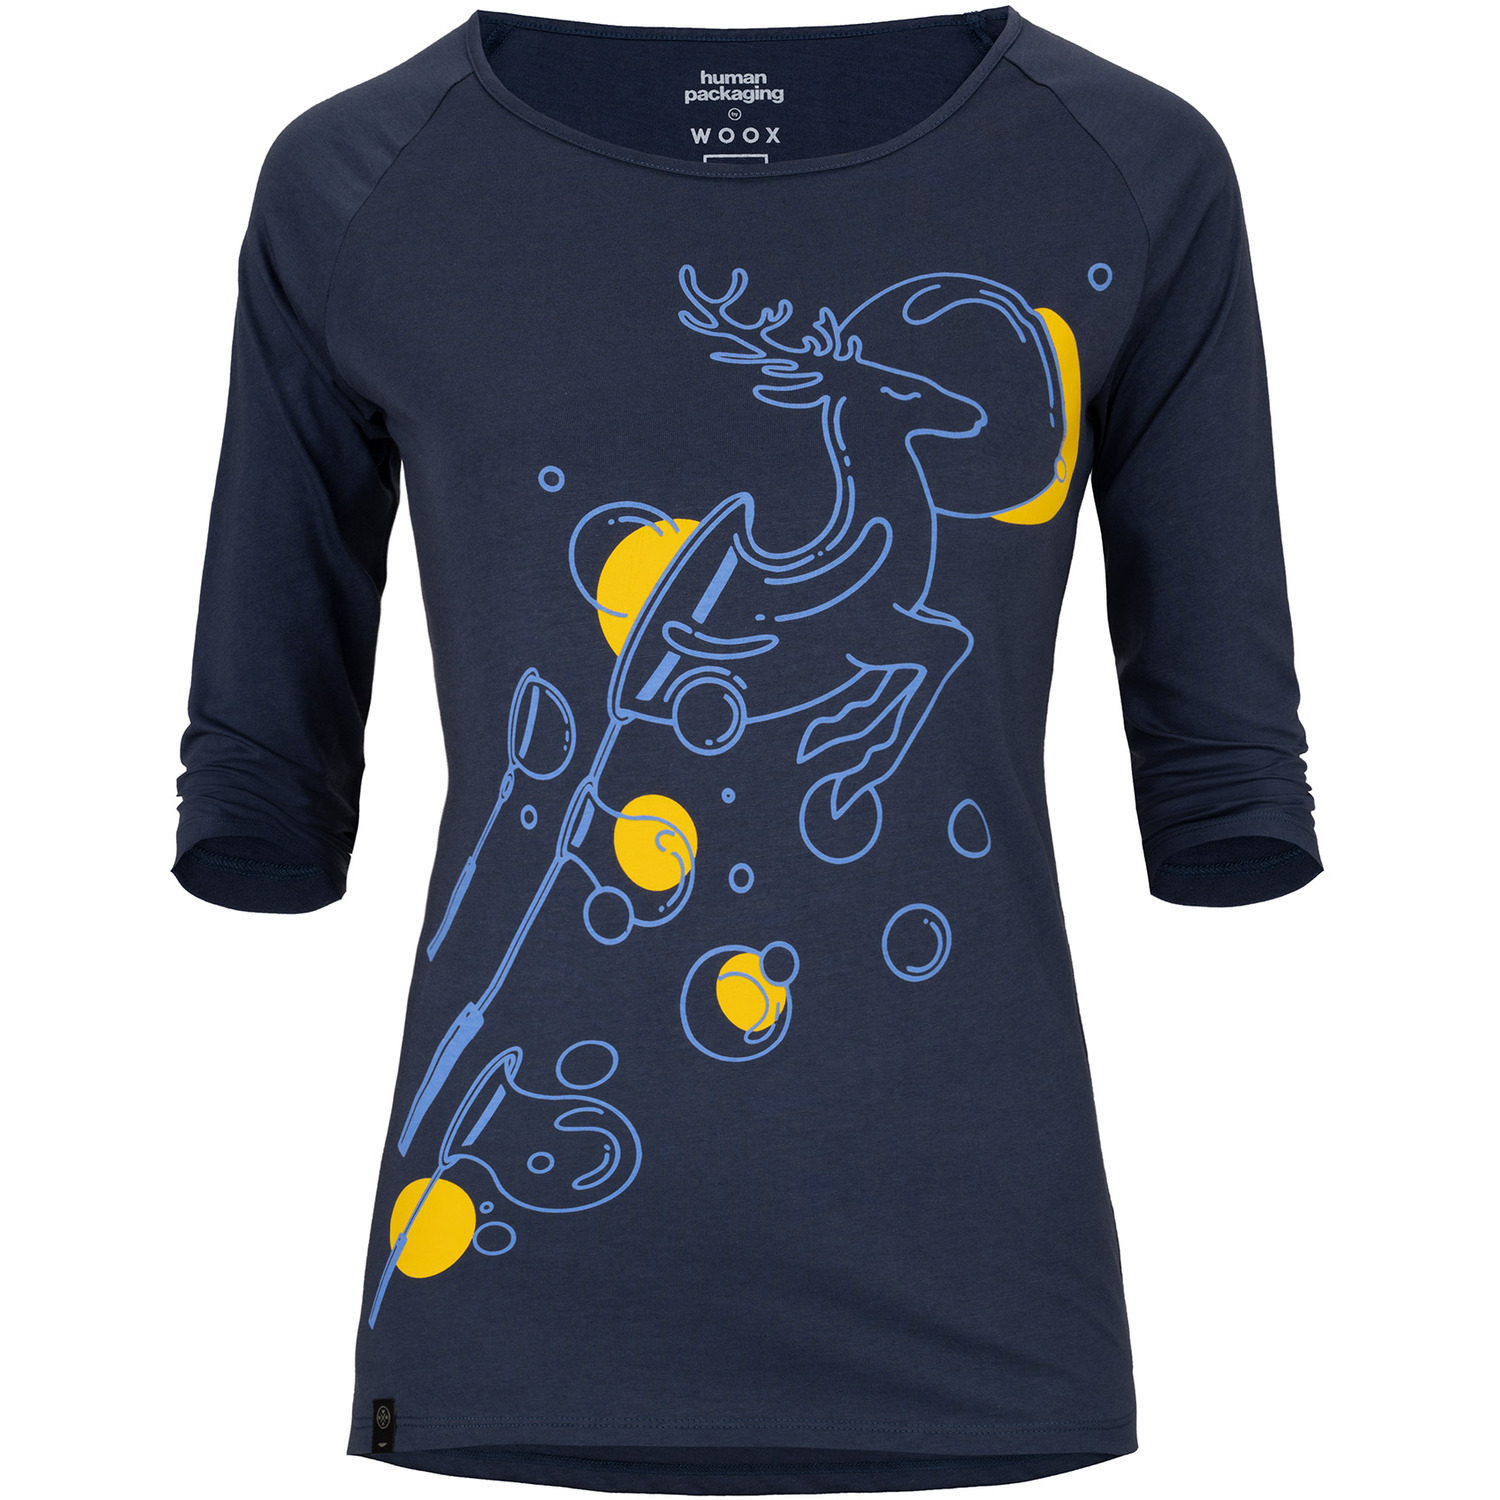 WOOX Dukeries Blue Nights T-shirt